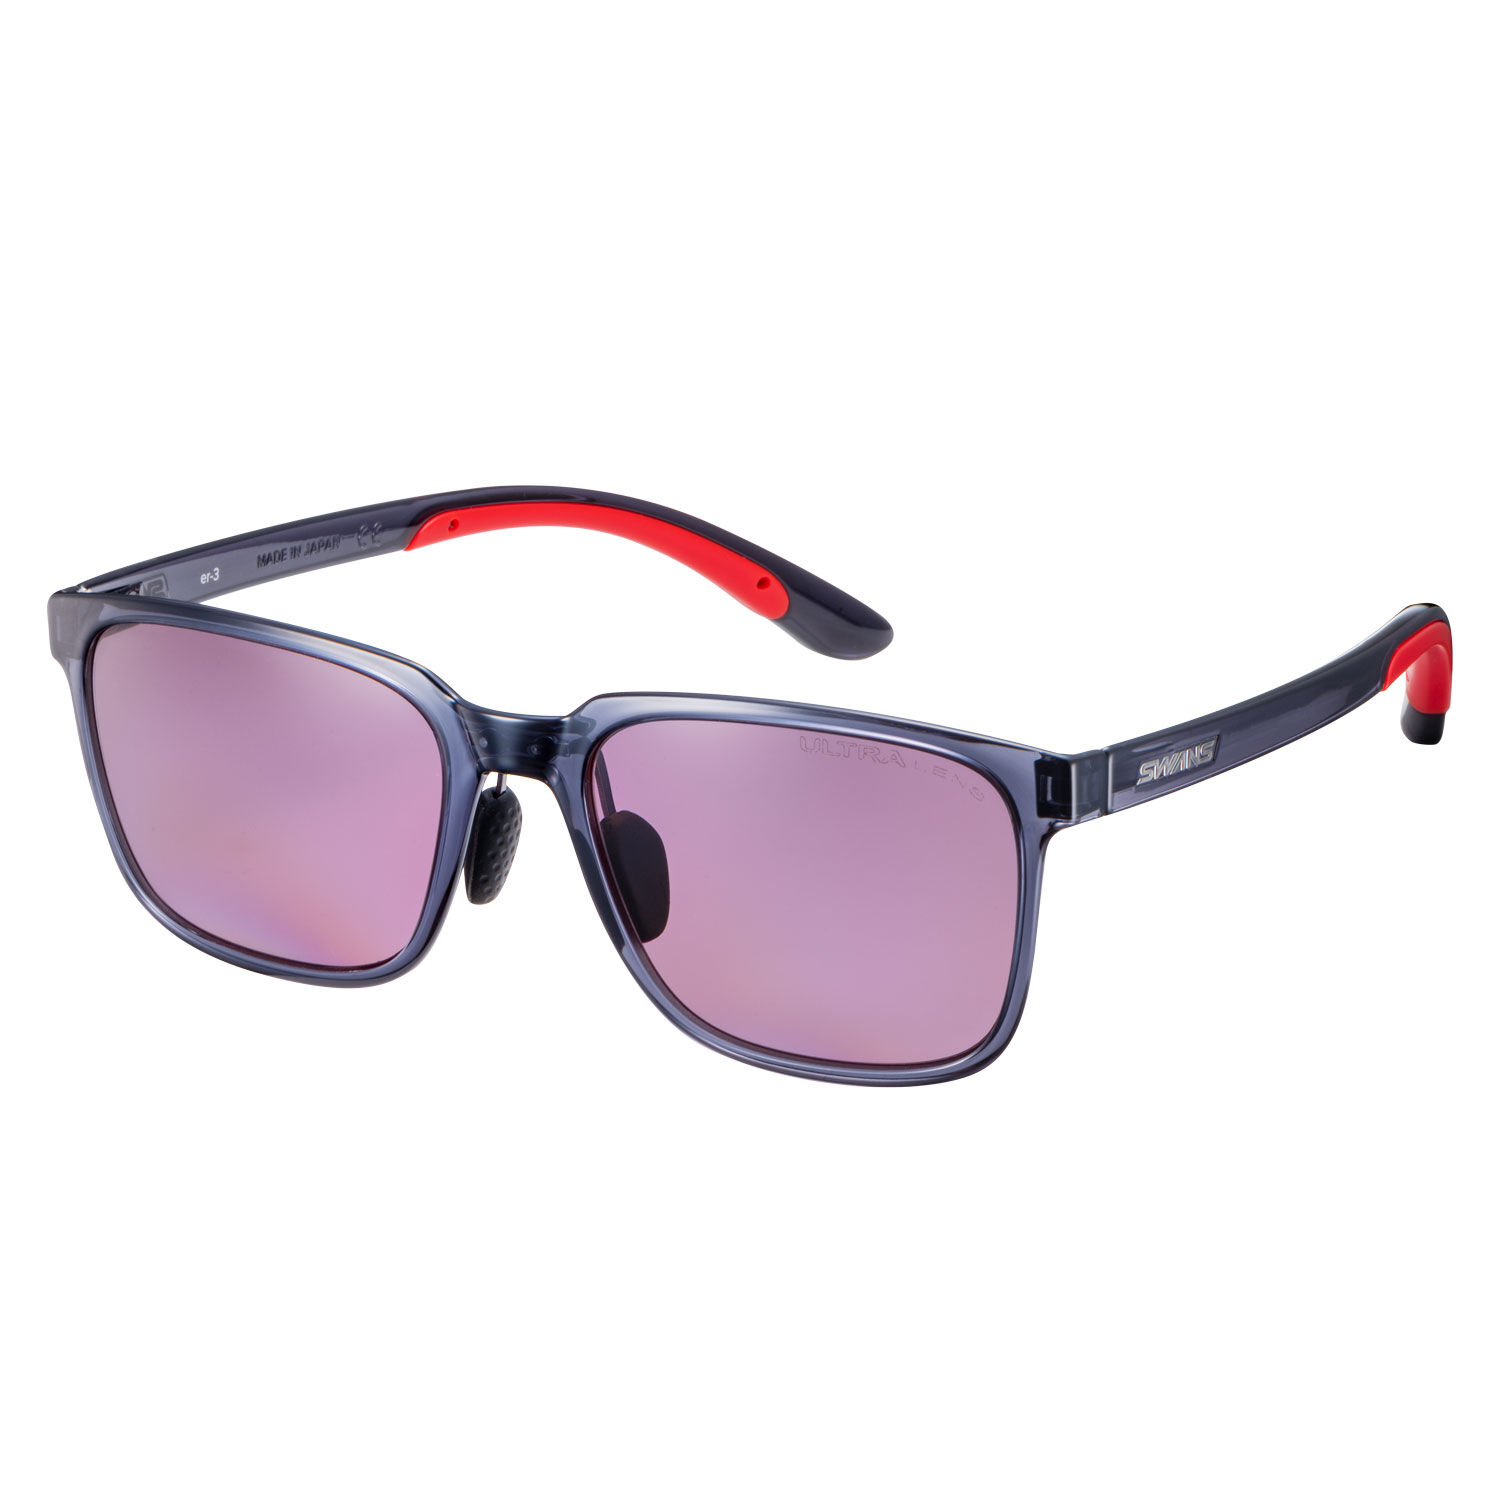 Reebok Aviator Premium Sunglasses Model No-118518,-MRP 4999.00, Imported,